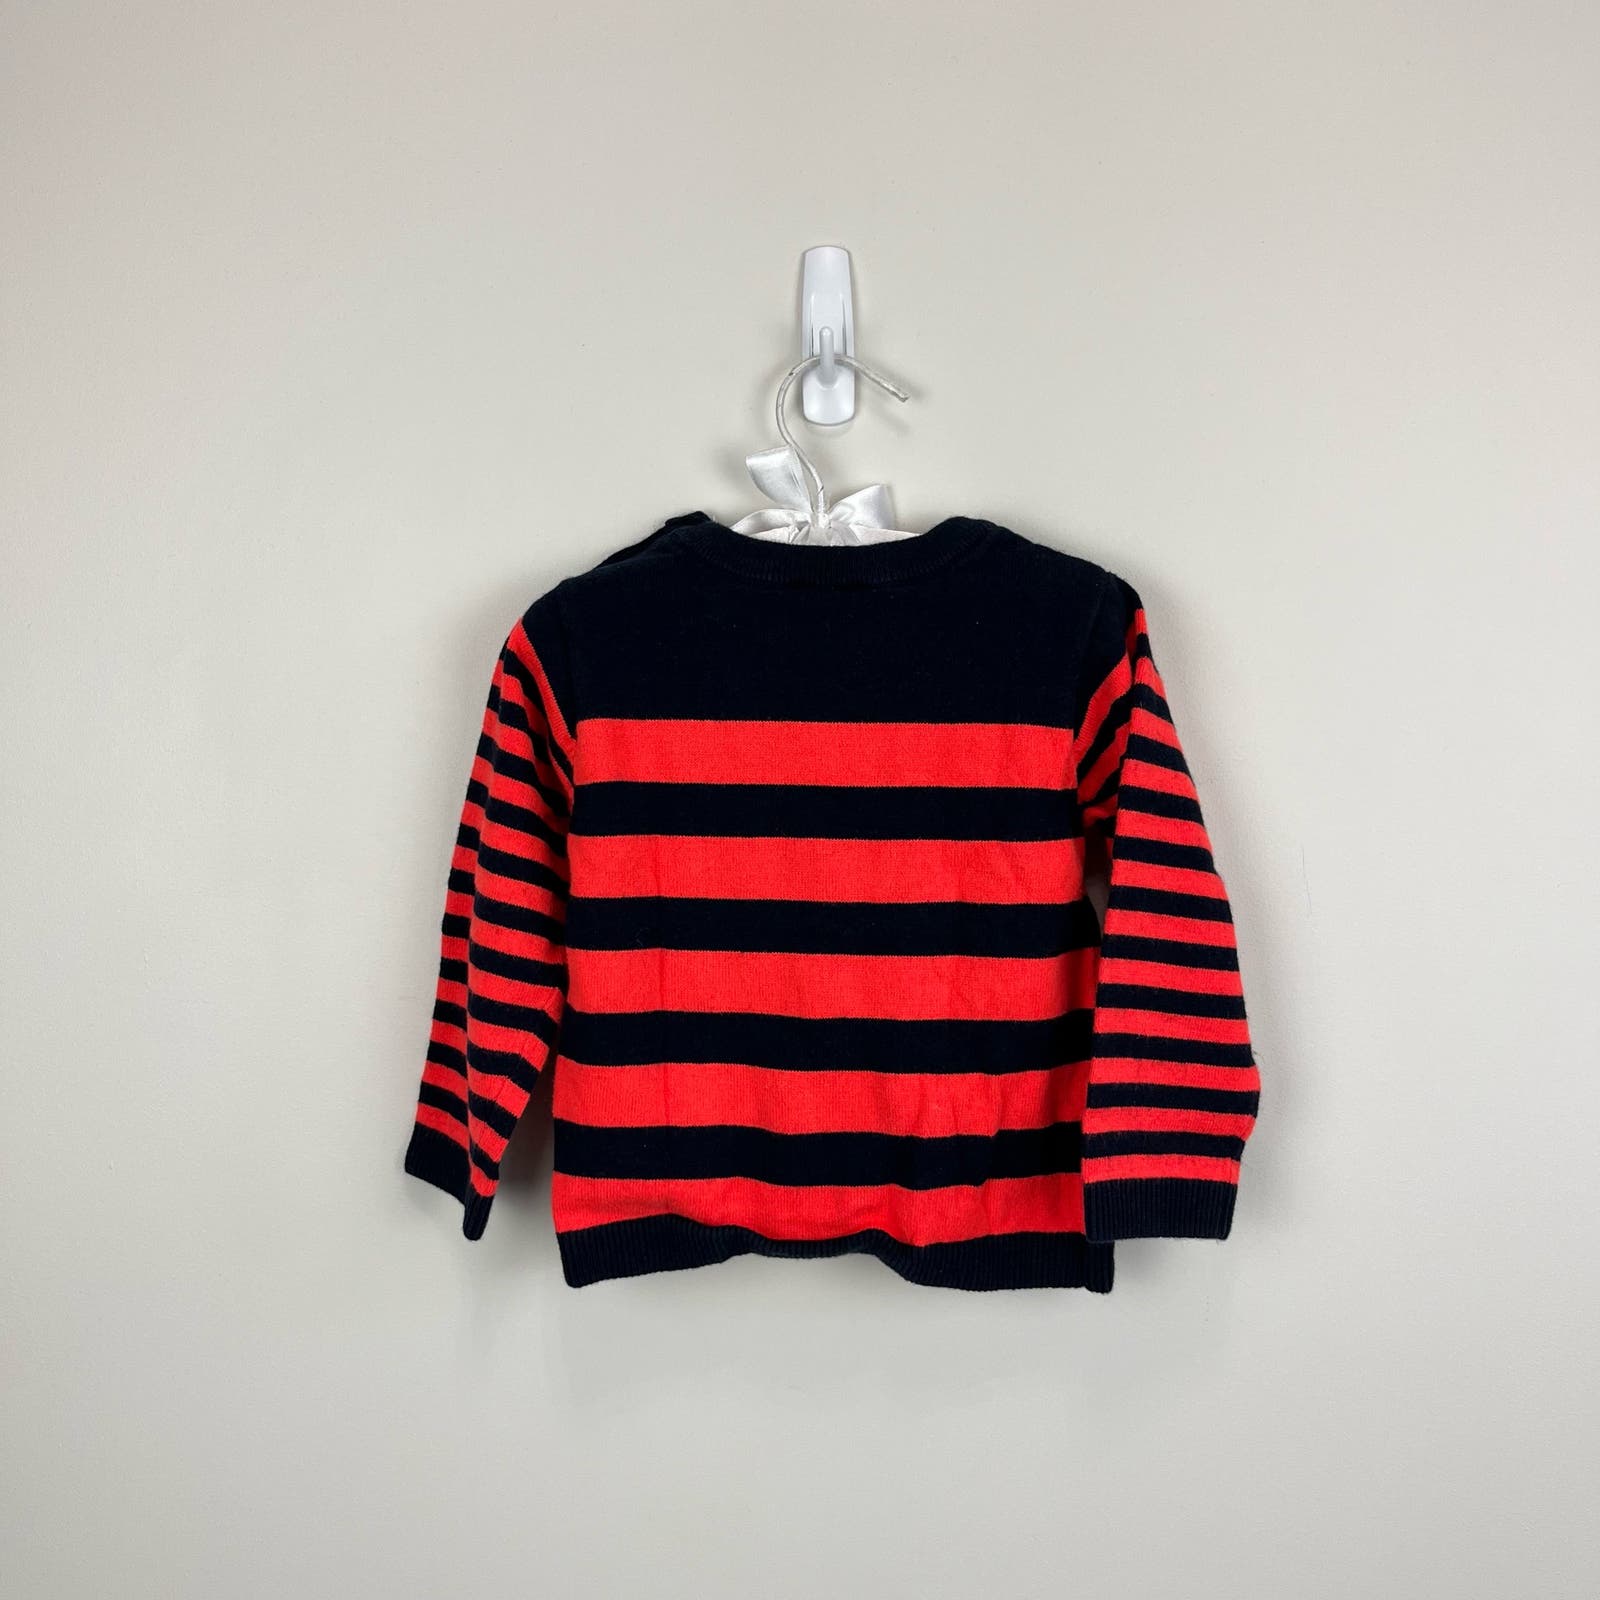 Jacadi Paris Striped Sweater 24 Months